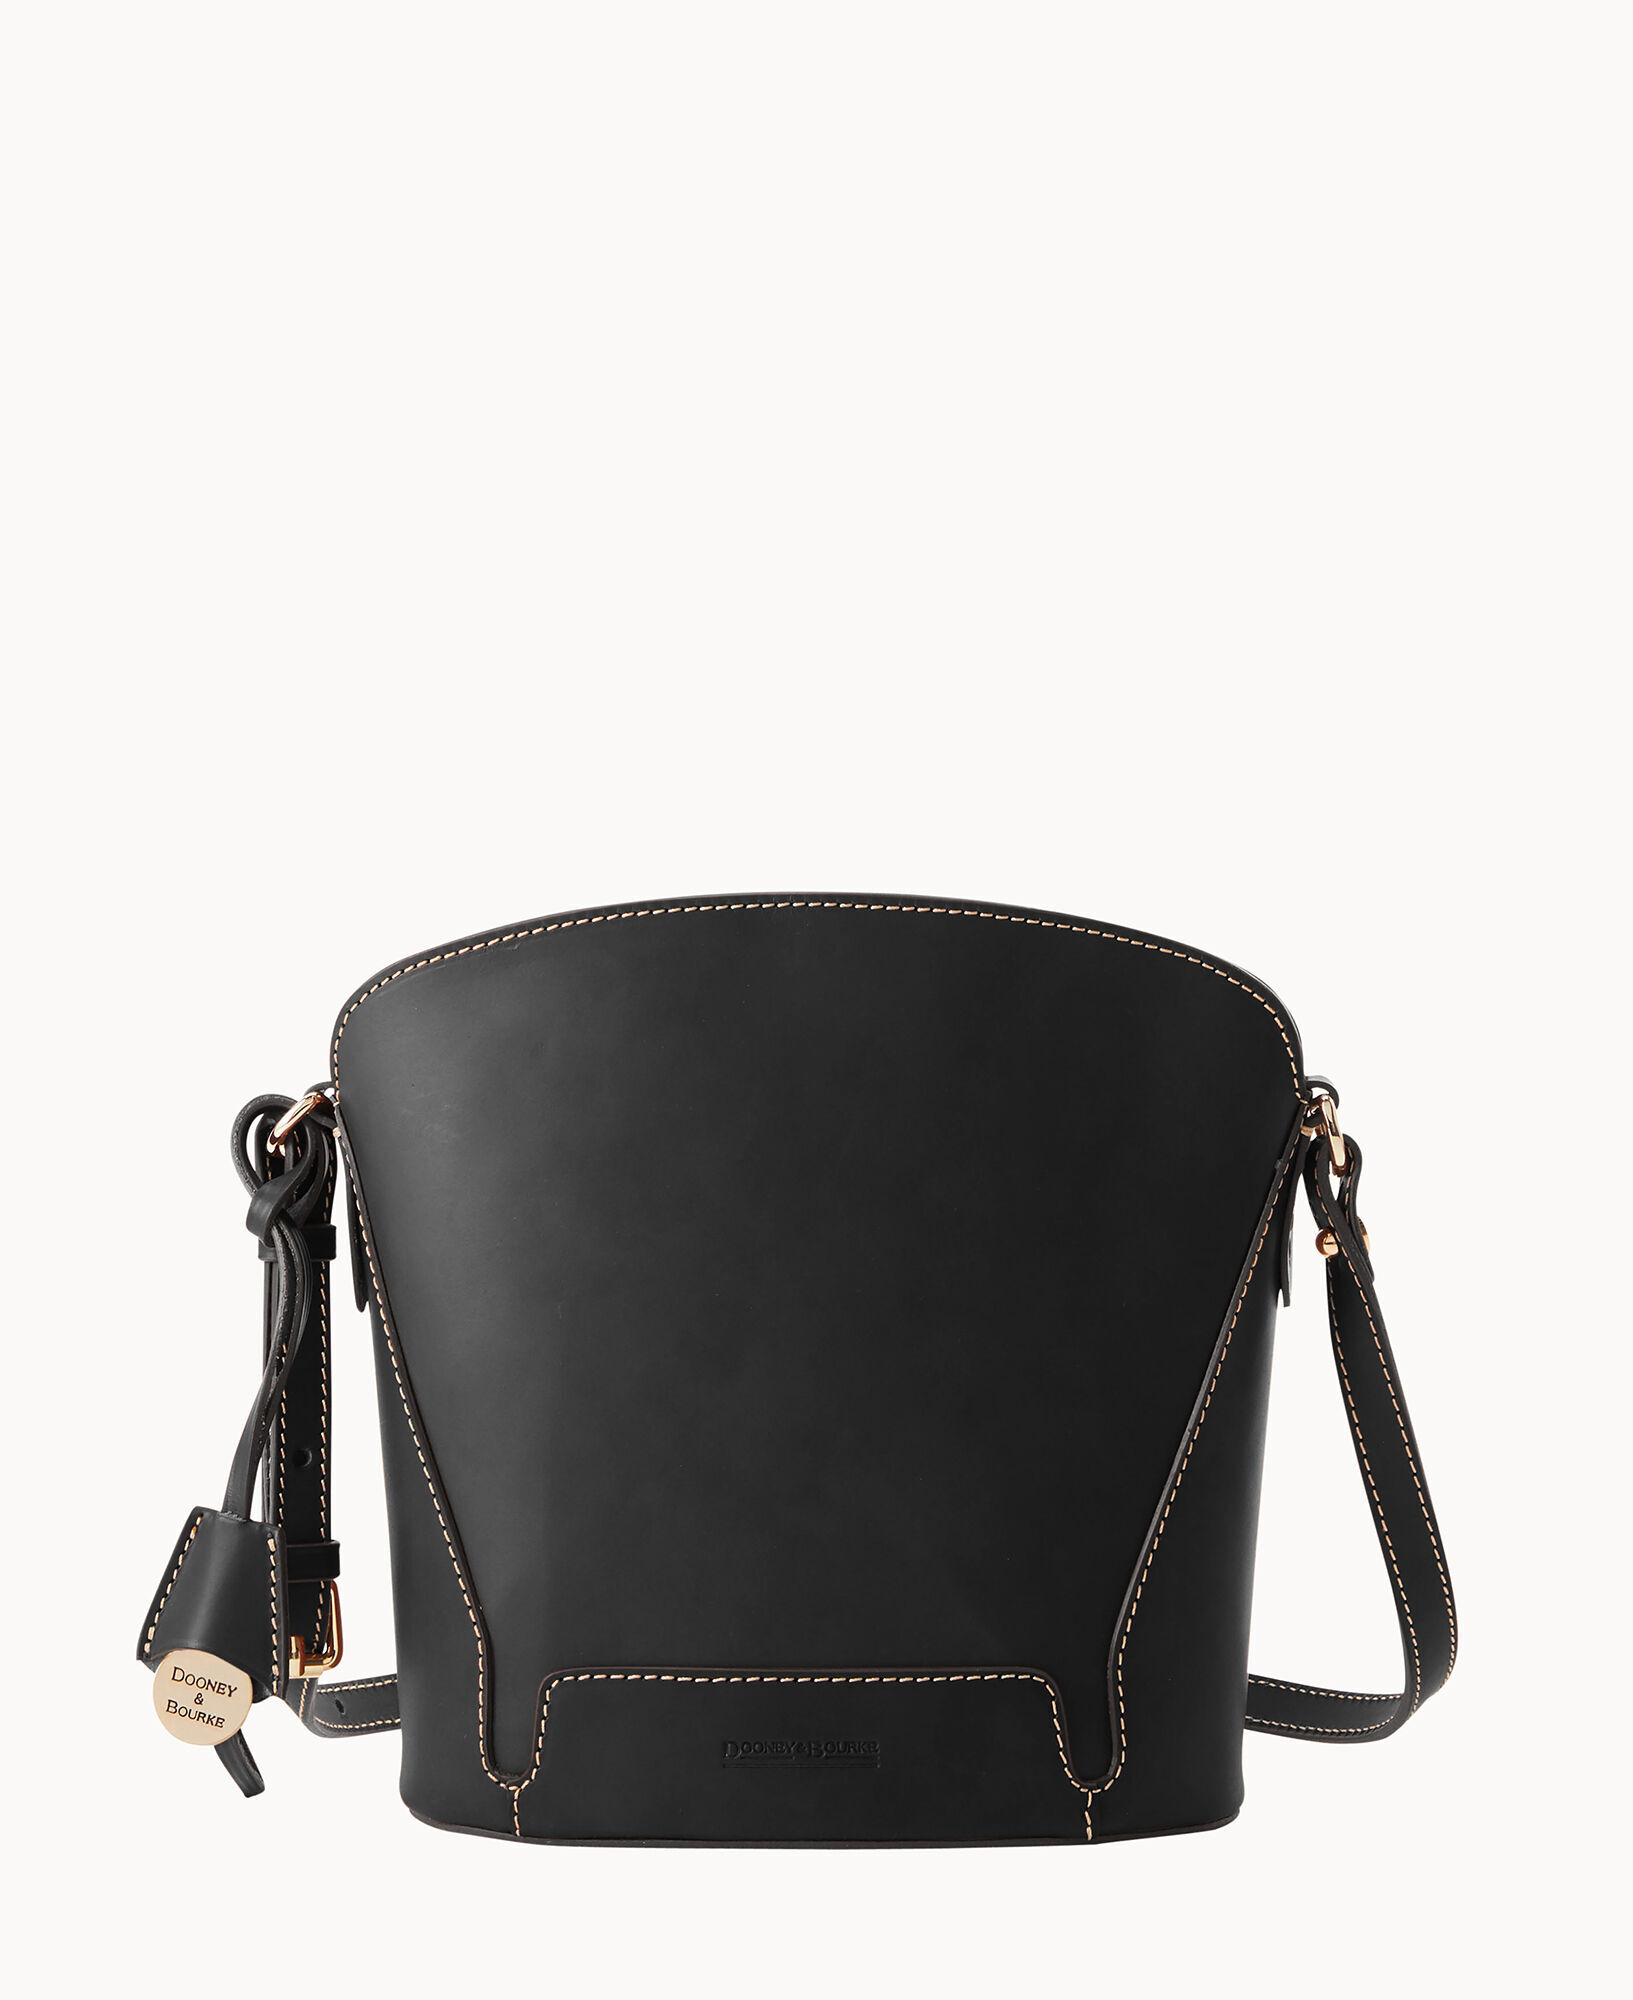 Dooney & Bourke 100% Leather Black Leather Crossbody Bag One Size